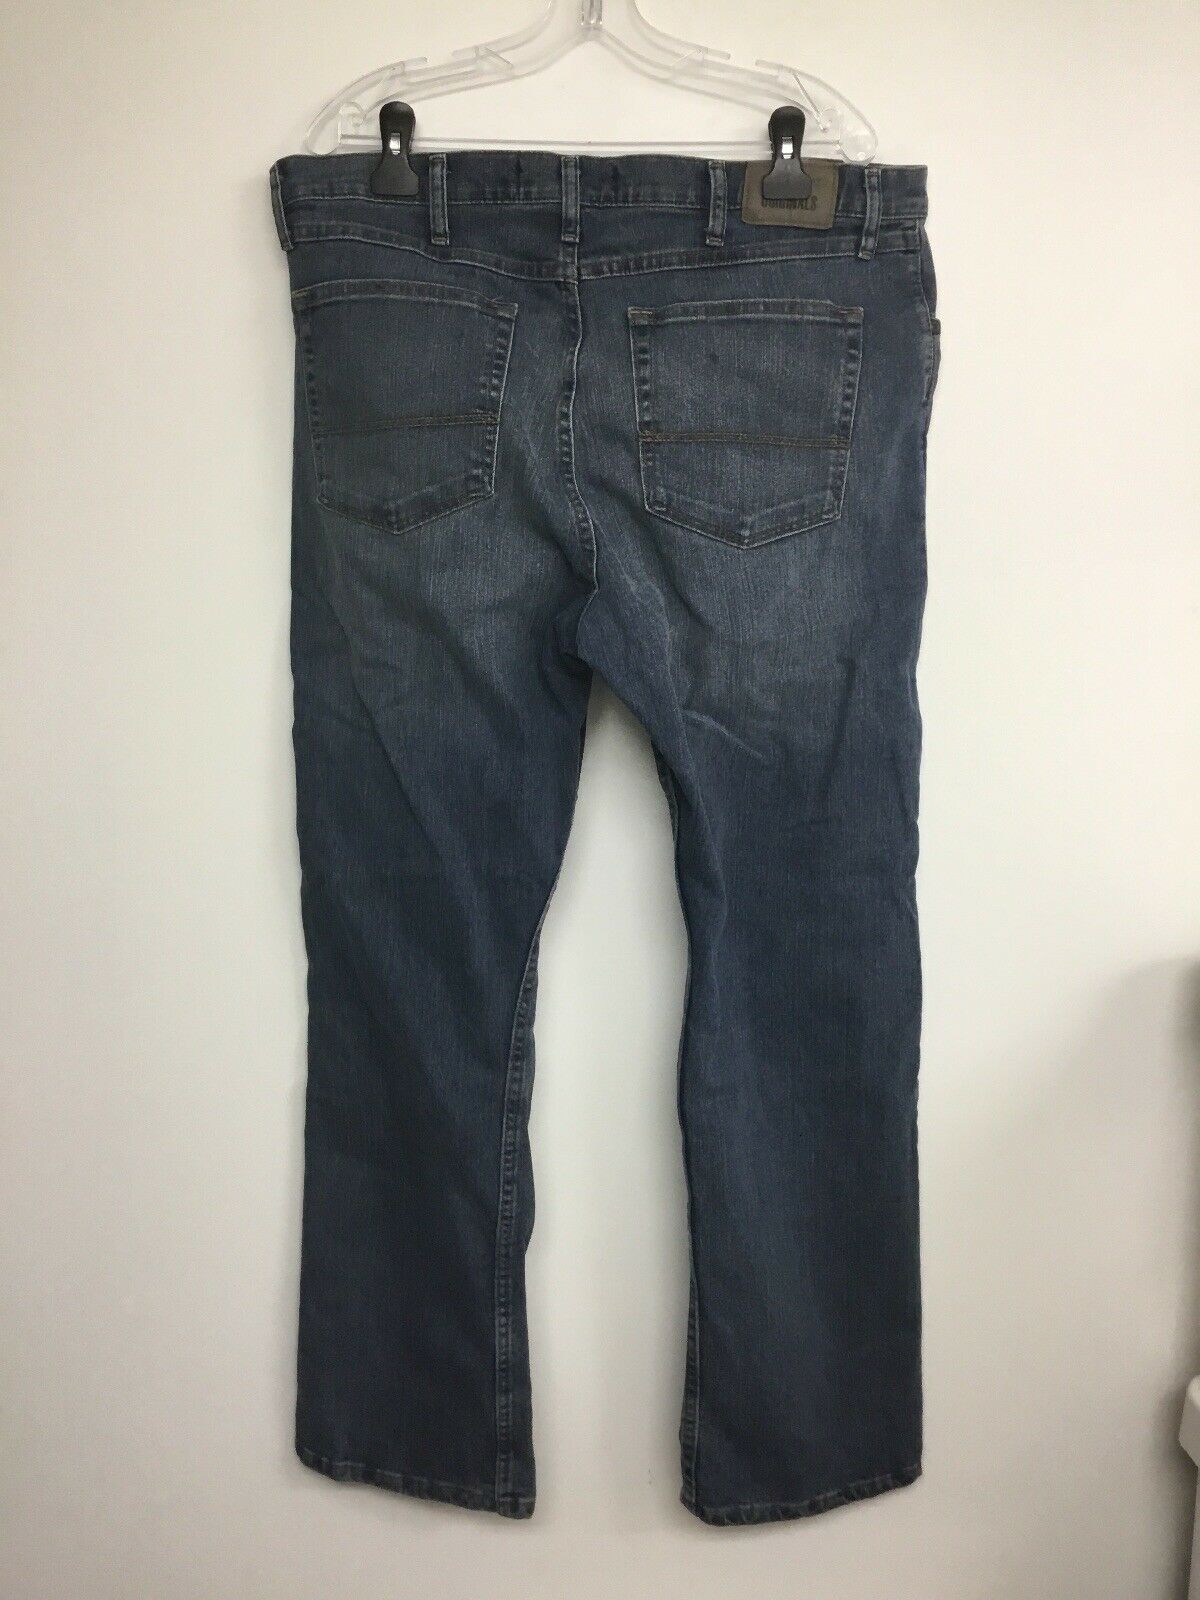 Men's Wrangler Originals Relaxed Boot Cut Blue Jeans Size 38x30. - Jeans